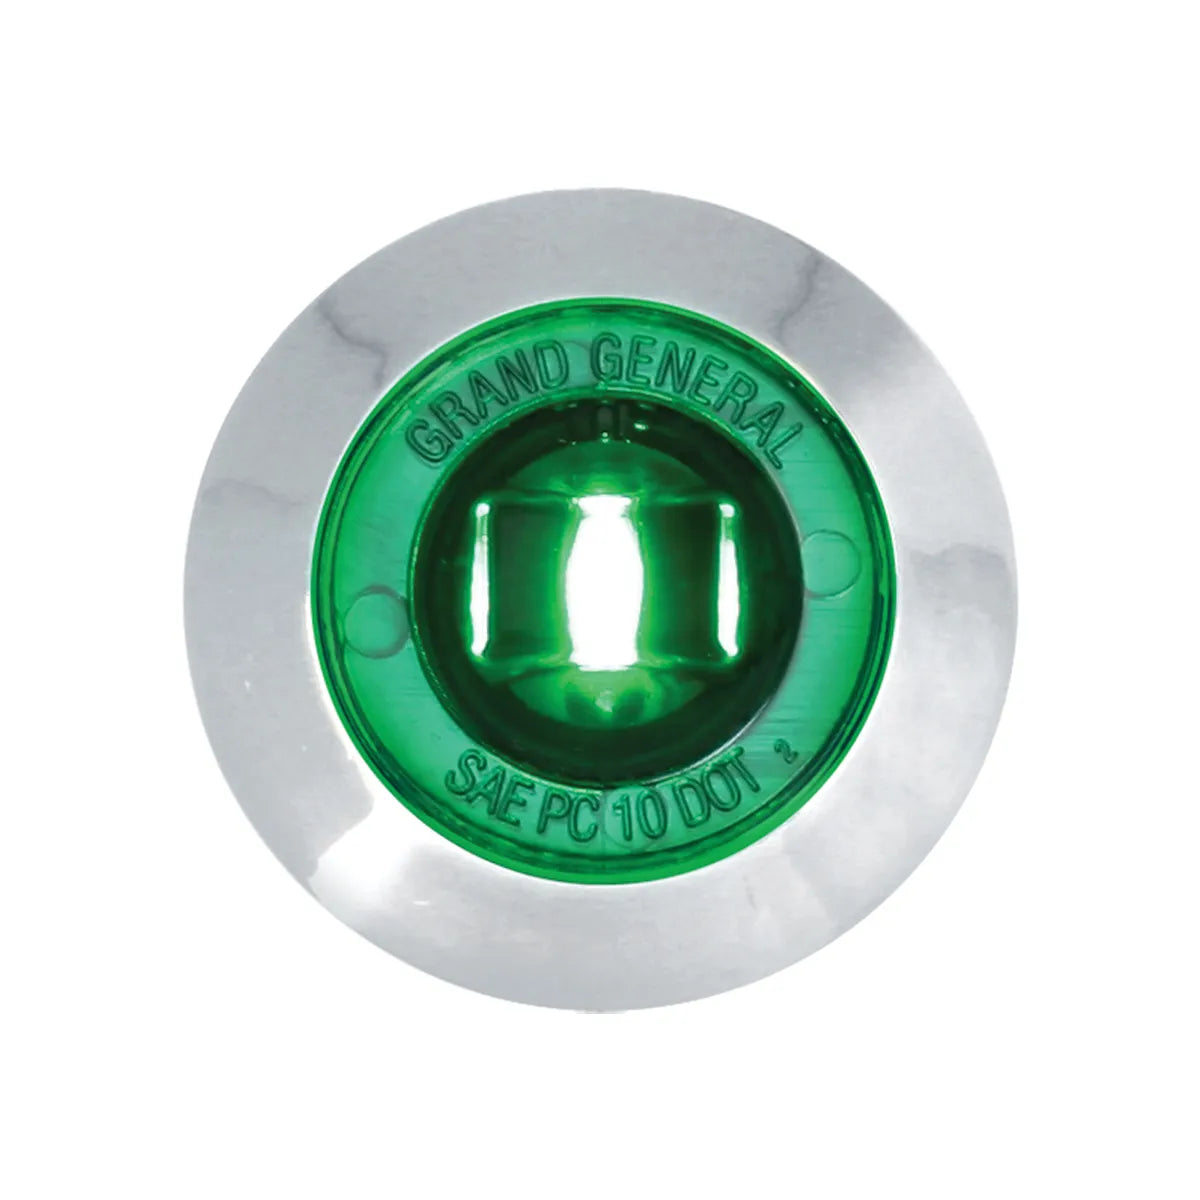 1 Inch Mini Green 1 LED Light with Chrome Plastic Bezel  -  87066